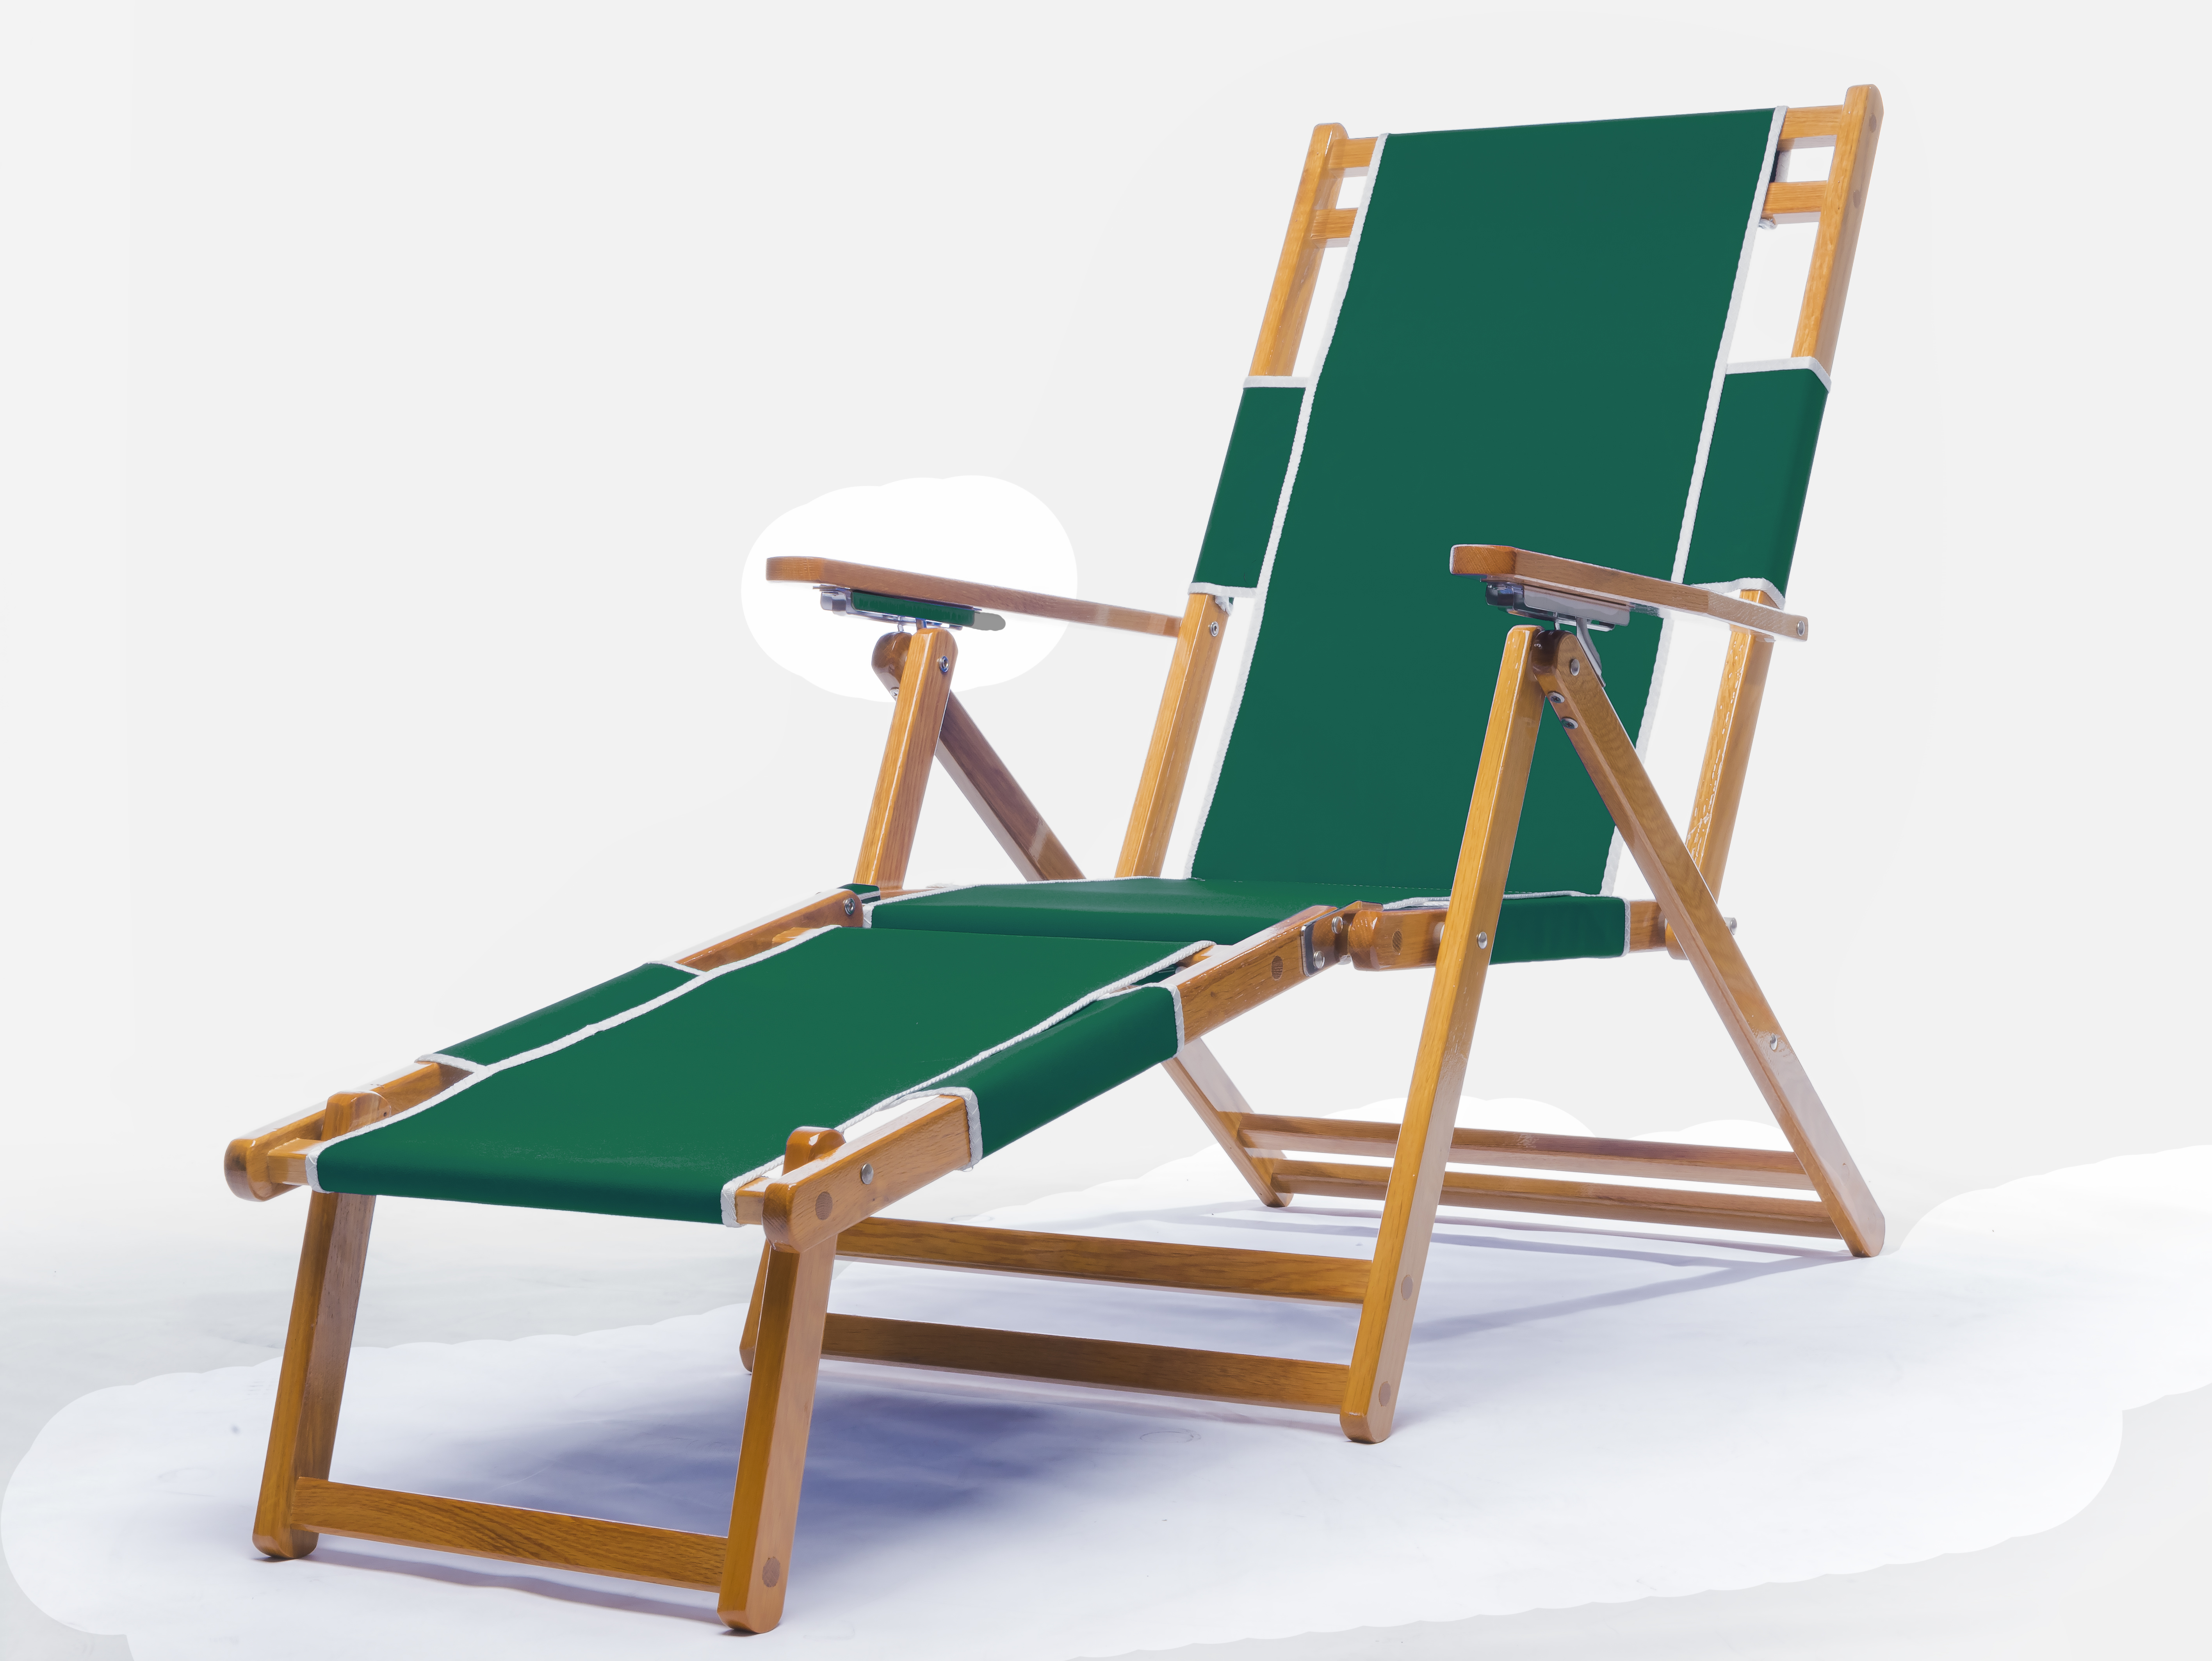 Beach Chair
Forest Green
$189.00
